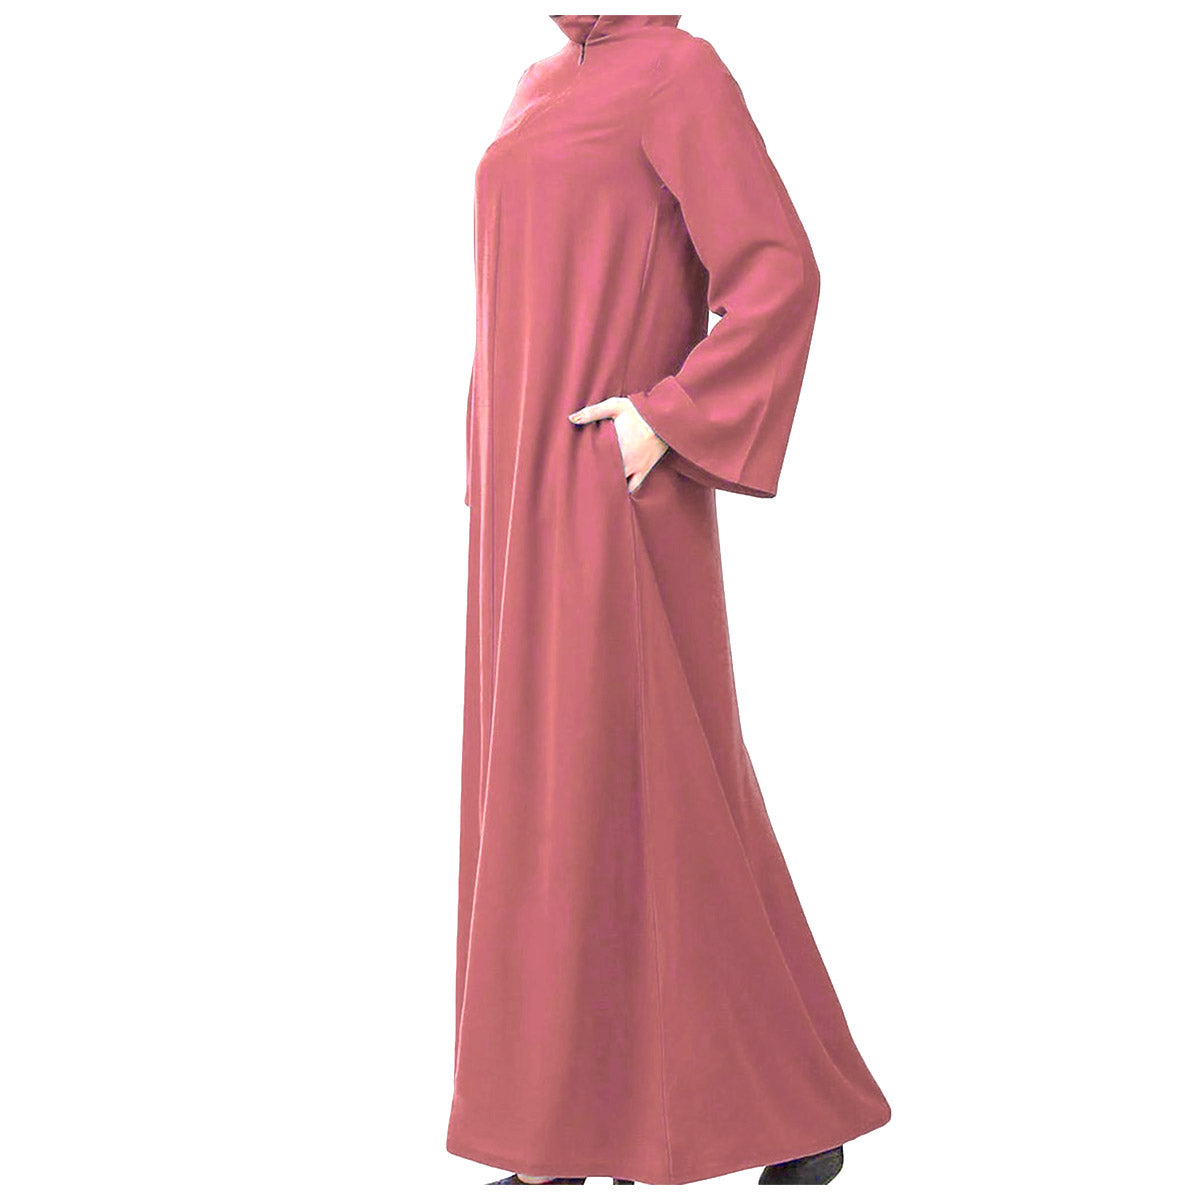 abaya with utility pockets on both sides